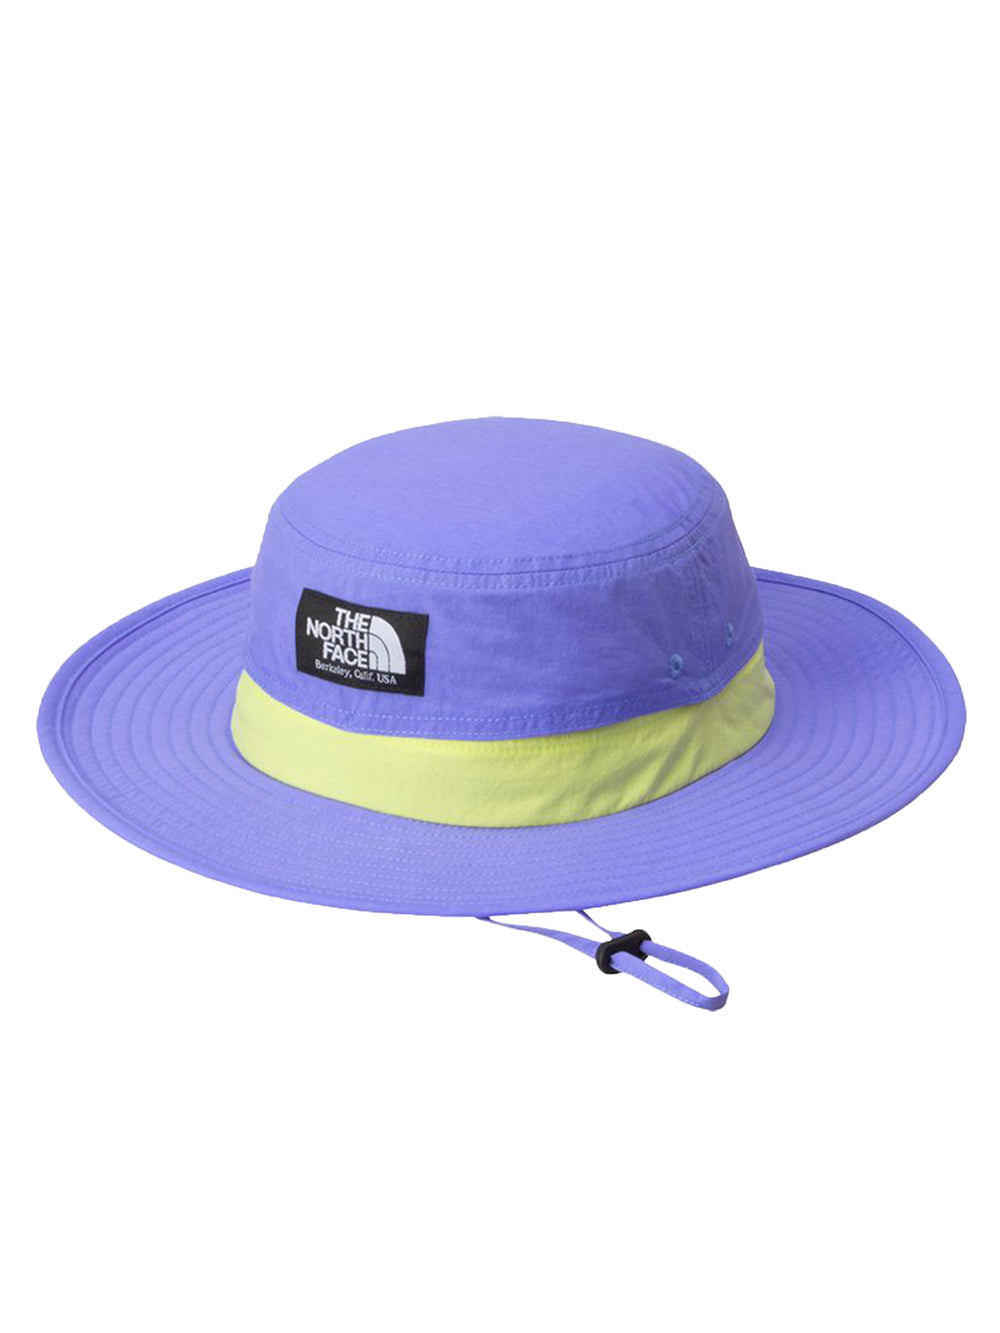 [THE NORTH FACE] キッズ ホライズンハット 帽子 / ノースフェイス キッズ 子供用 帽子 UVカット 紫外線対策 日焼け NNJ02312 24SS [A] 20_1